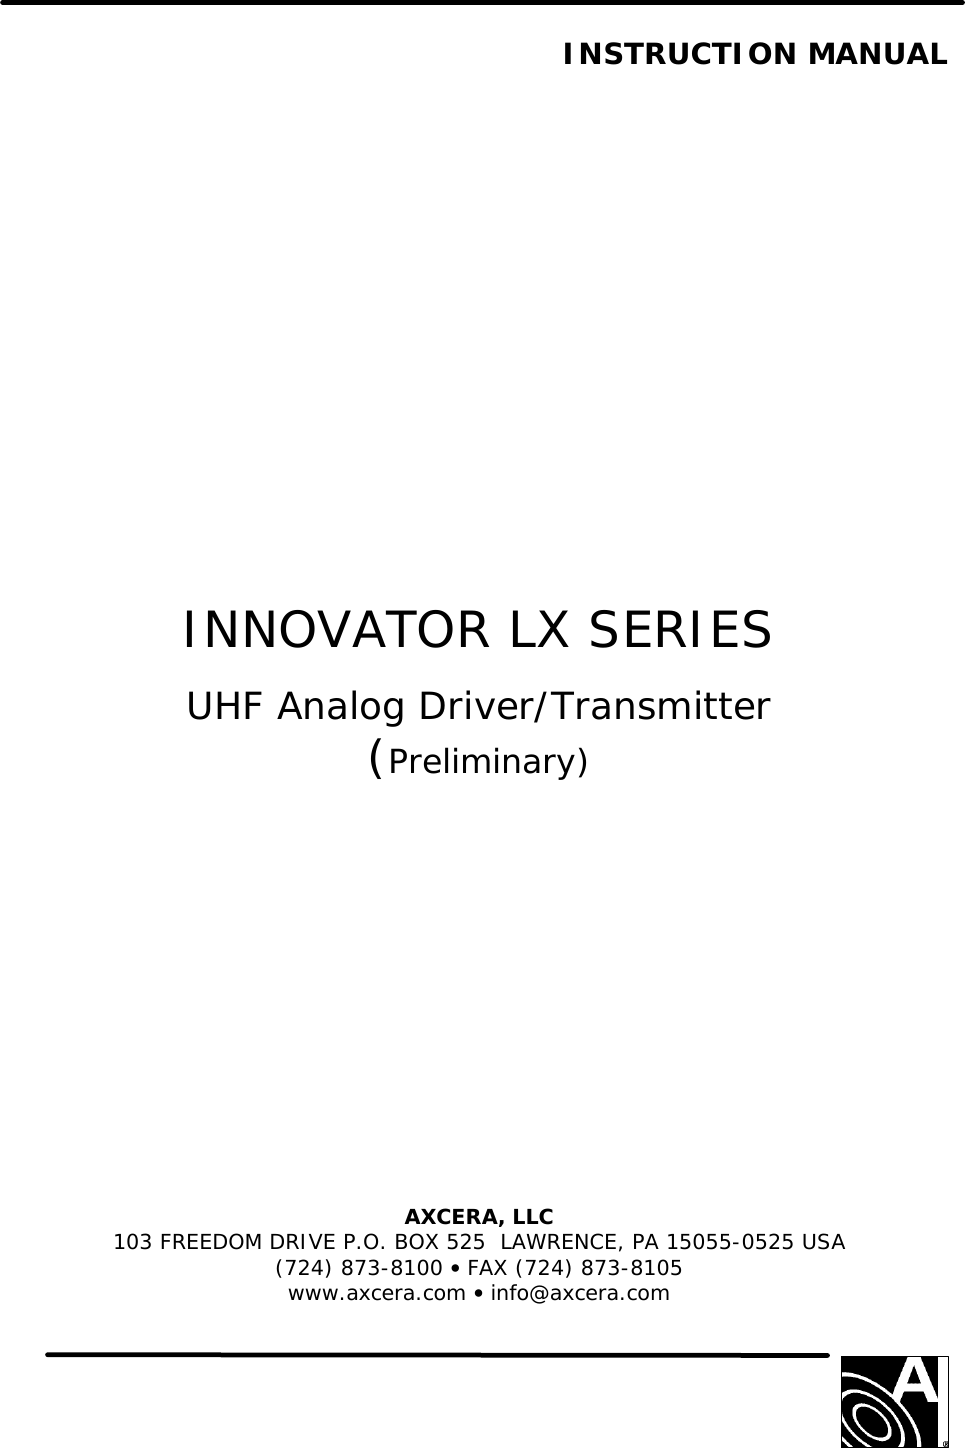   INSTRUCTION MANUAL                       INNOVATOR LX SERIES  UHF Analog Driver/Transmitter (Preliminary)              AXCERA, LLC  103 FREEDOM DRIVE P.O. BOX 525  LAWRENCE, PA 15055-0525 USA (724) 873-8100 • FAX (724) 873-8105 www.axcera.com • info@axcera.com     